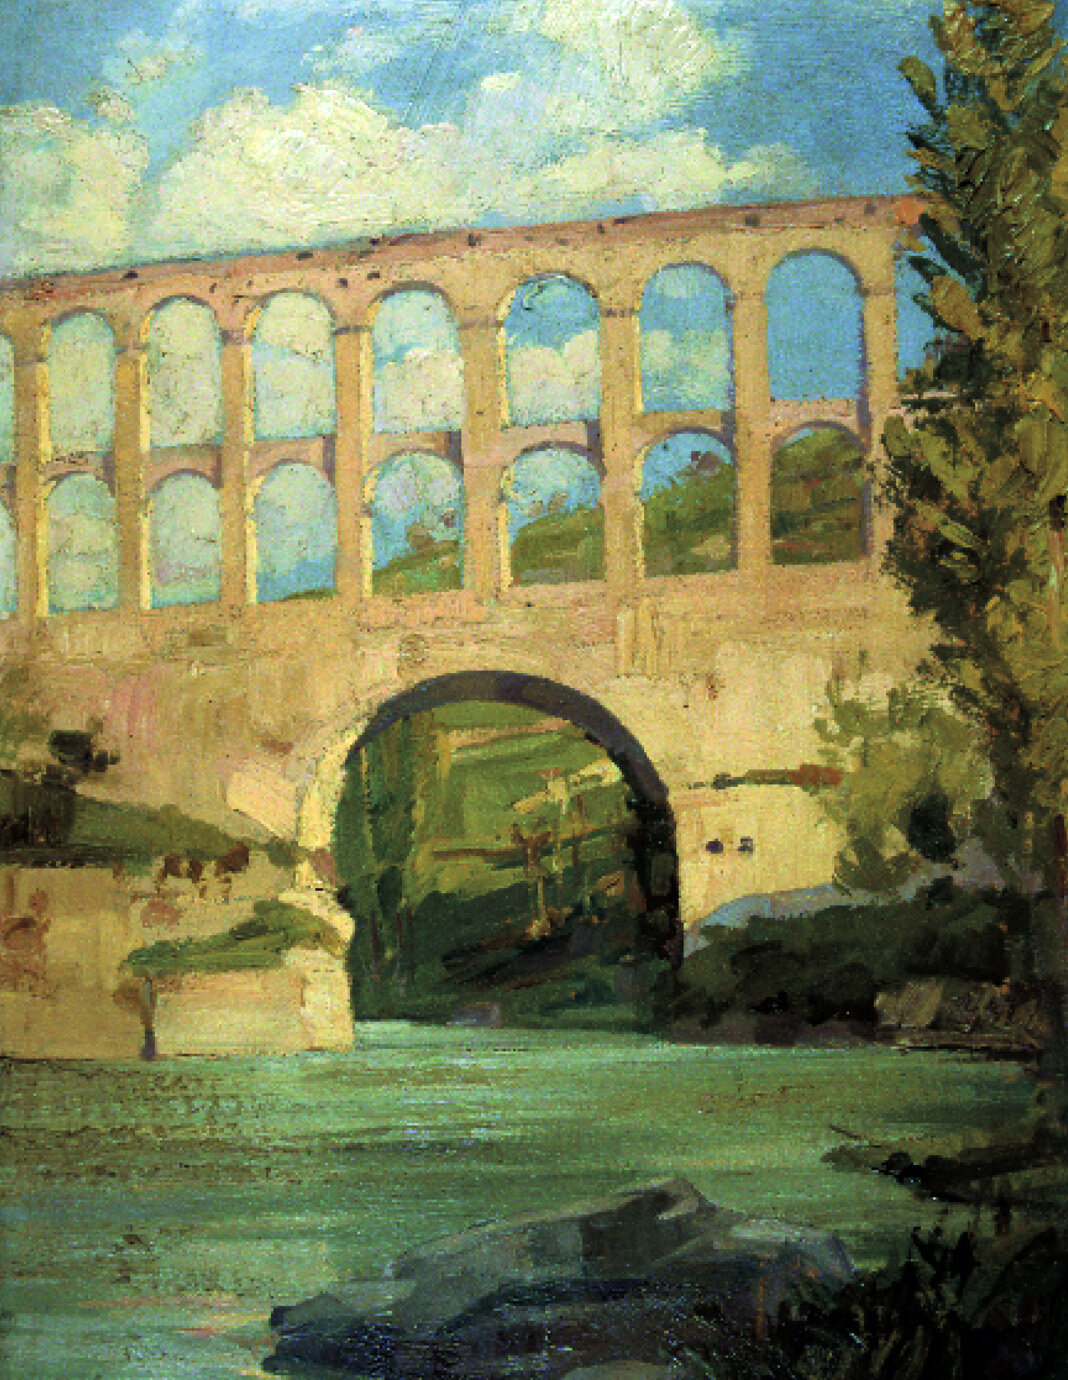 The “Ponte Cartaro” (bridge later destroyed)